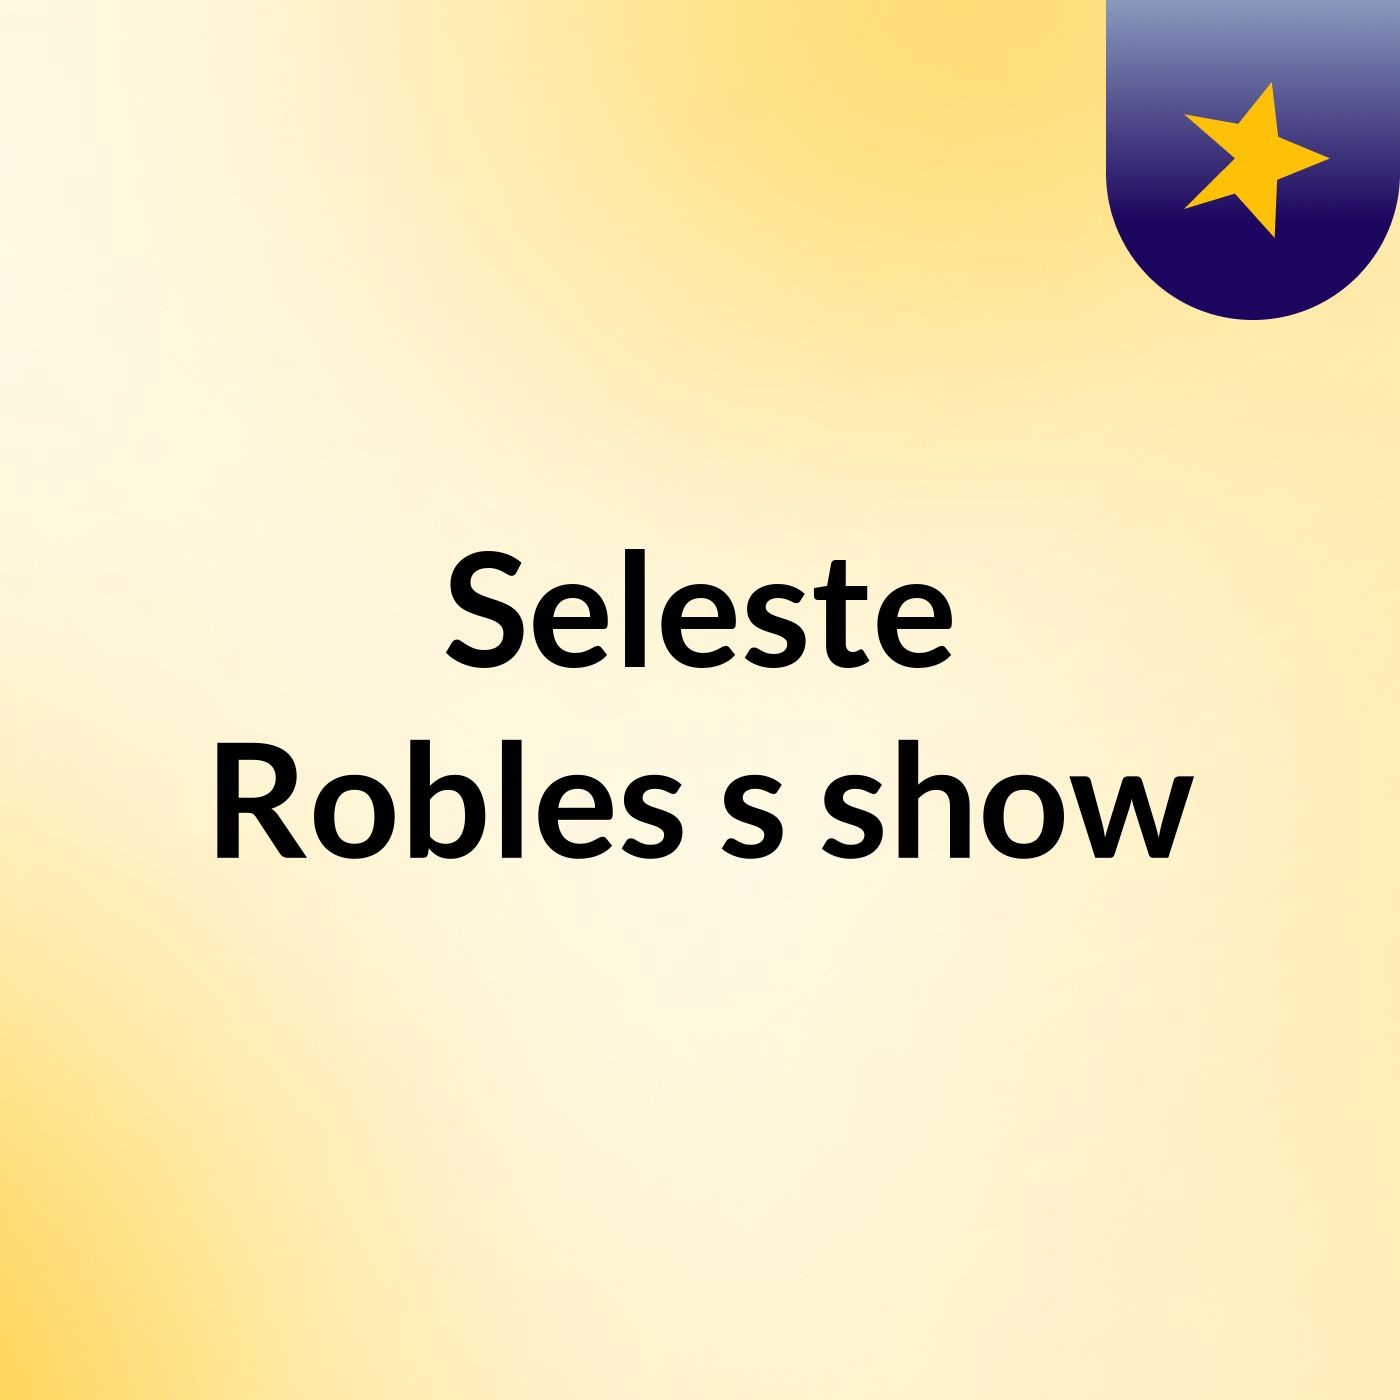 Seleste Robles's show